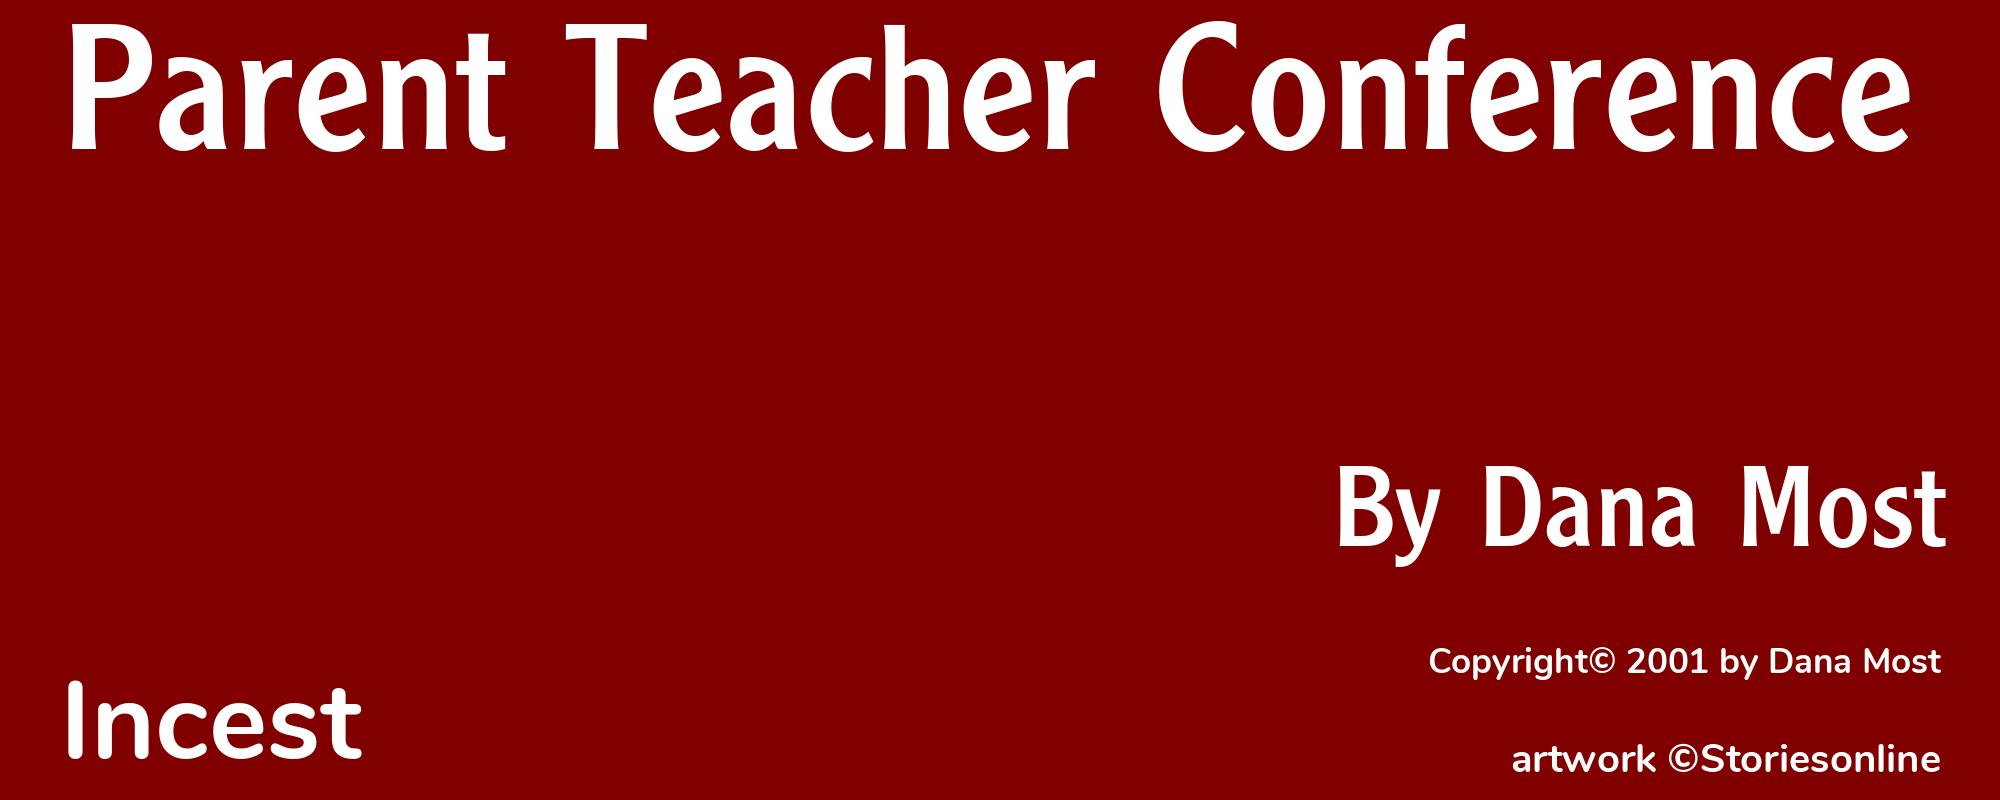 Parent Teacher Conference - Cover